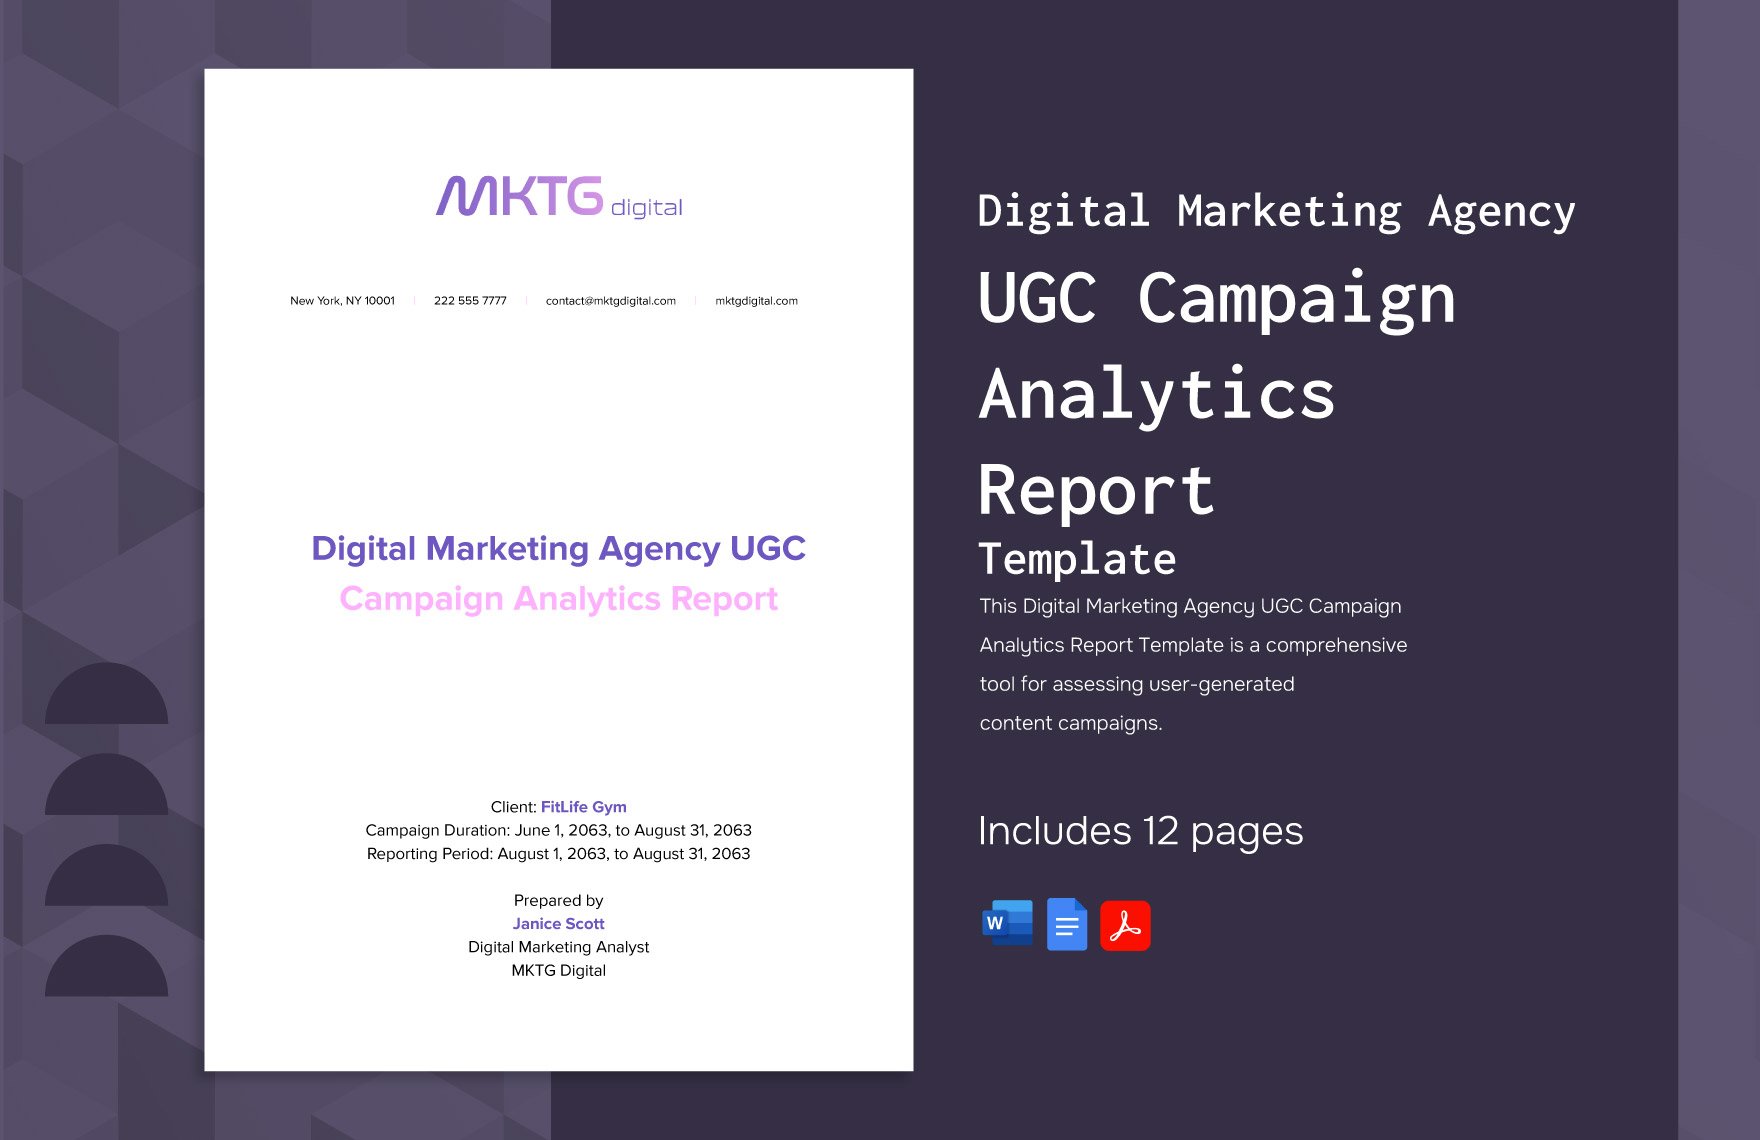 Digital Marketing Agency UGC Campaign Analytics Report Template